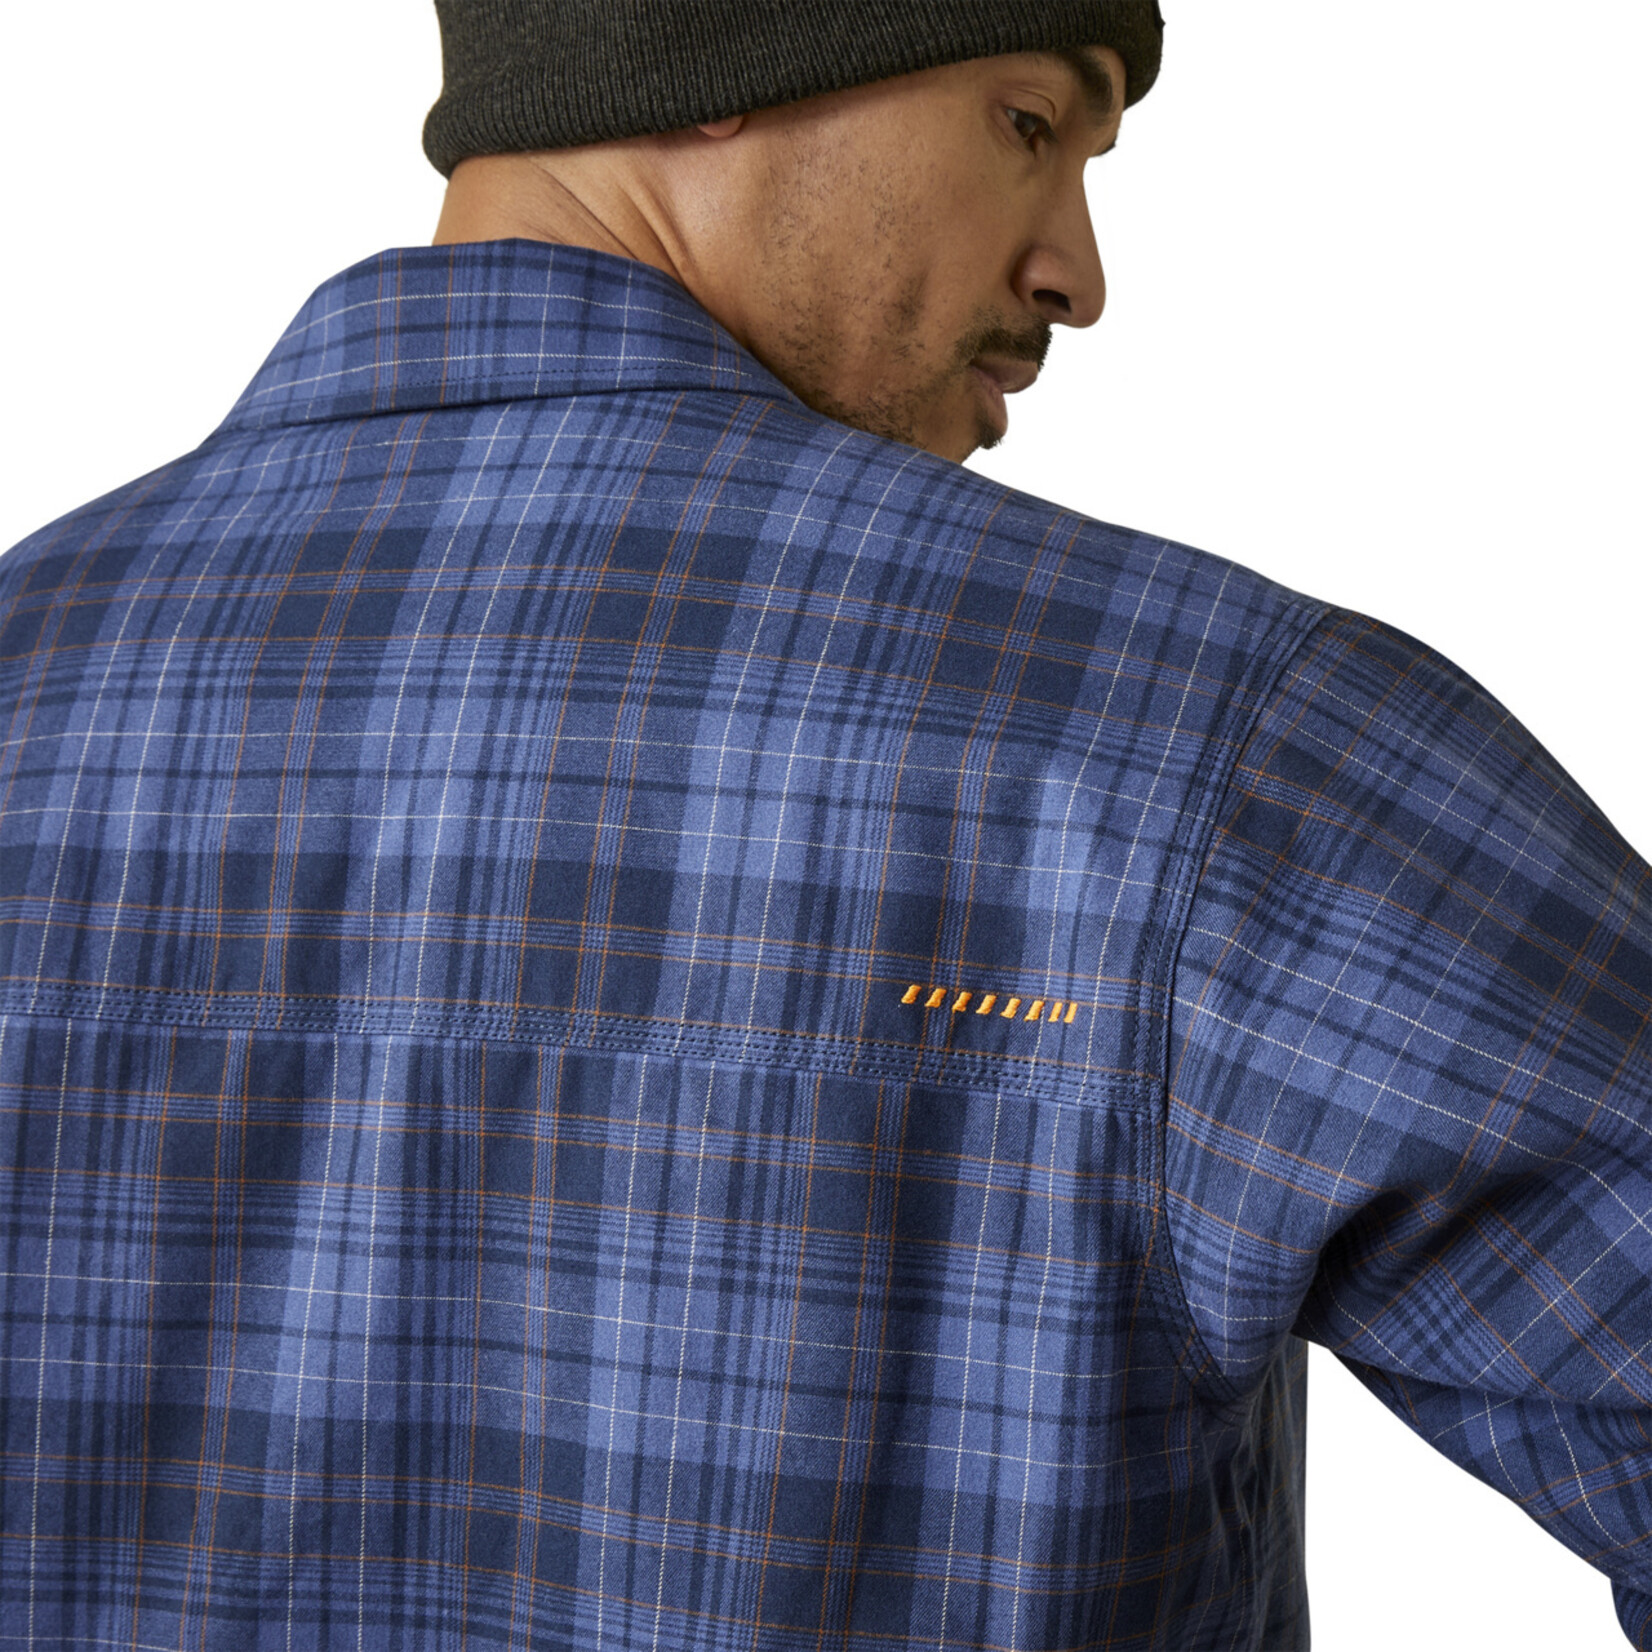 Ariat Men's Rebar Flannel Insulated Shirt Jacket 10046019